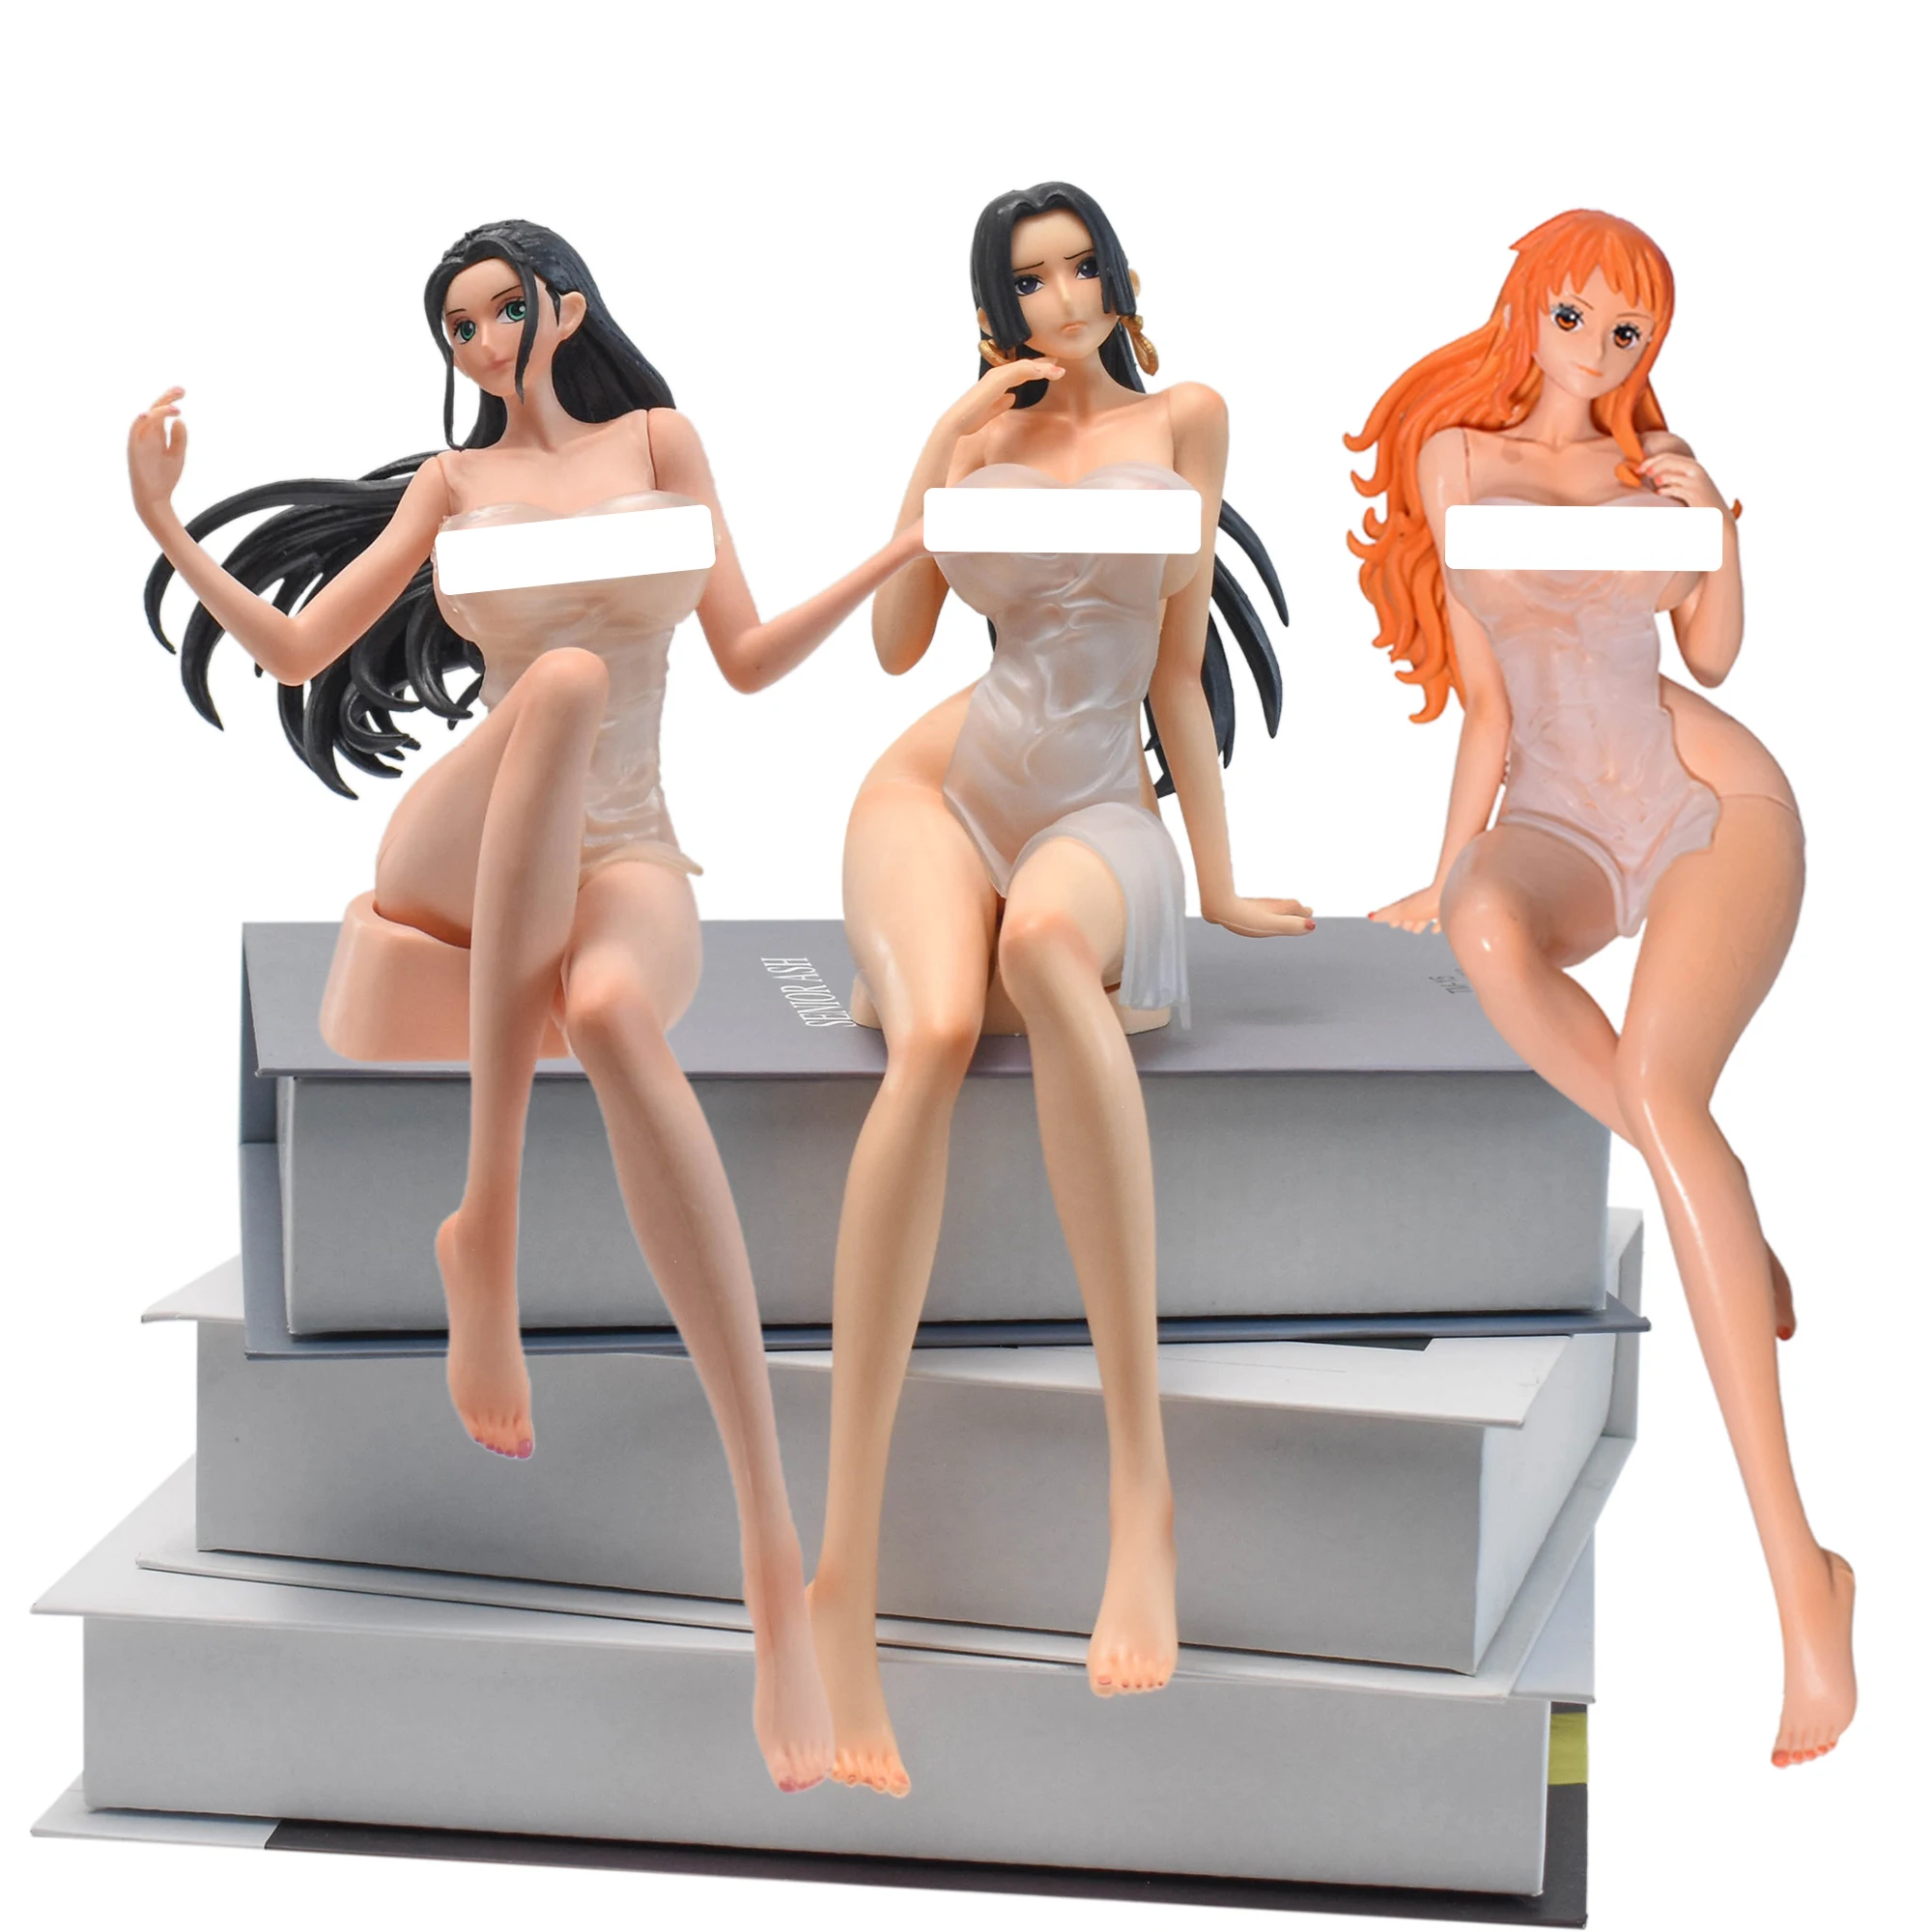 

Anime One Piece Figure Bathhouse Series Bath Towel Boa Hancock Nami Robin Swimsuit Collection PVC Action Figurine Christmas Gift